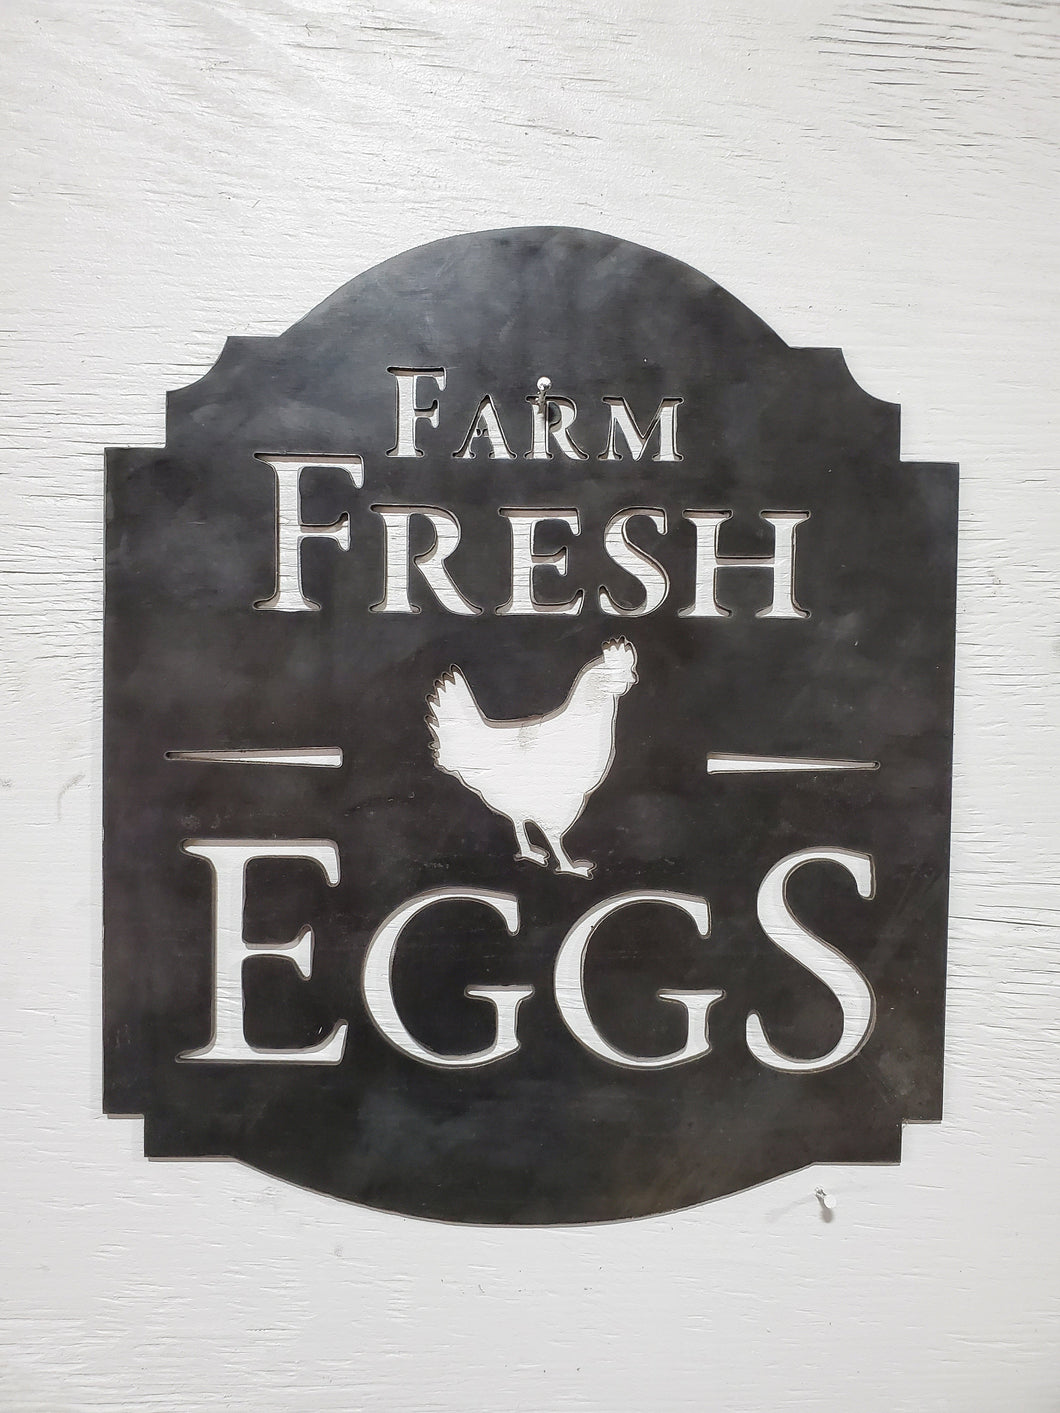 Farm Fresh Eggs sign, 14ga steel